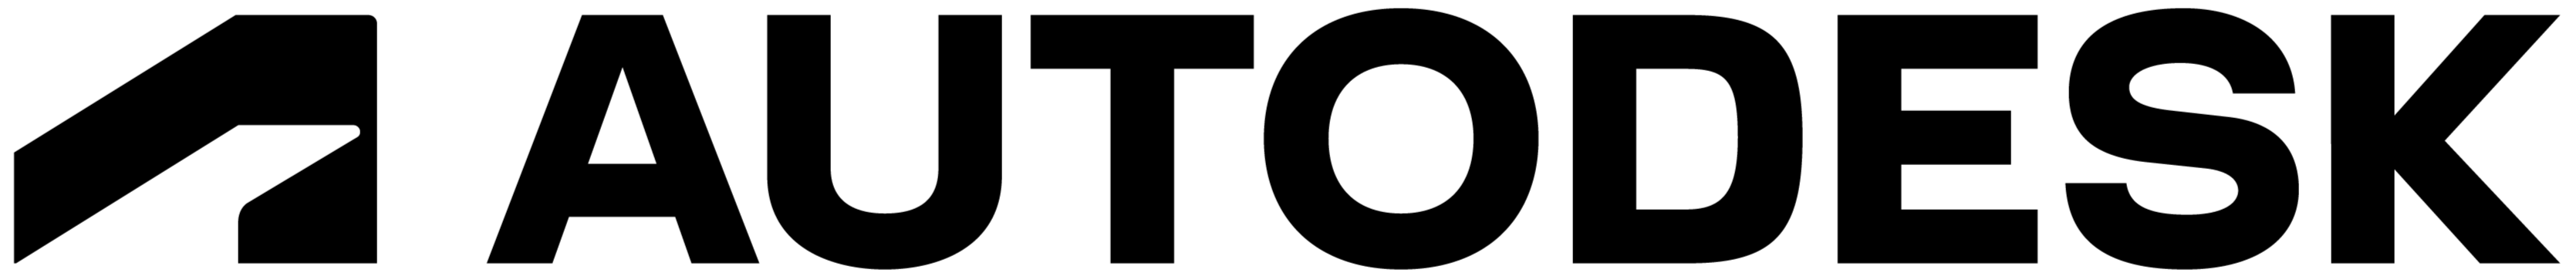 autodesk-logo-primary-rgb-black-large.png